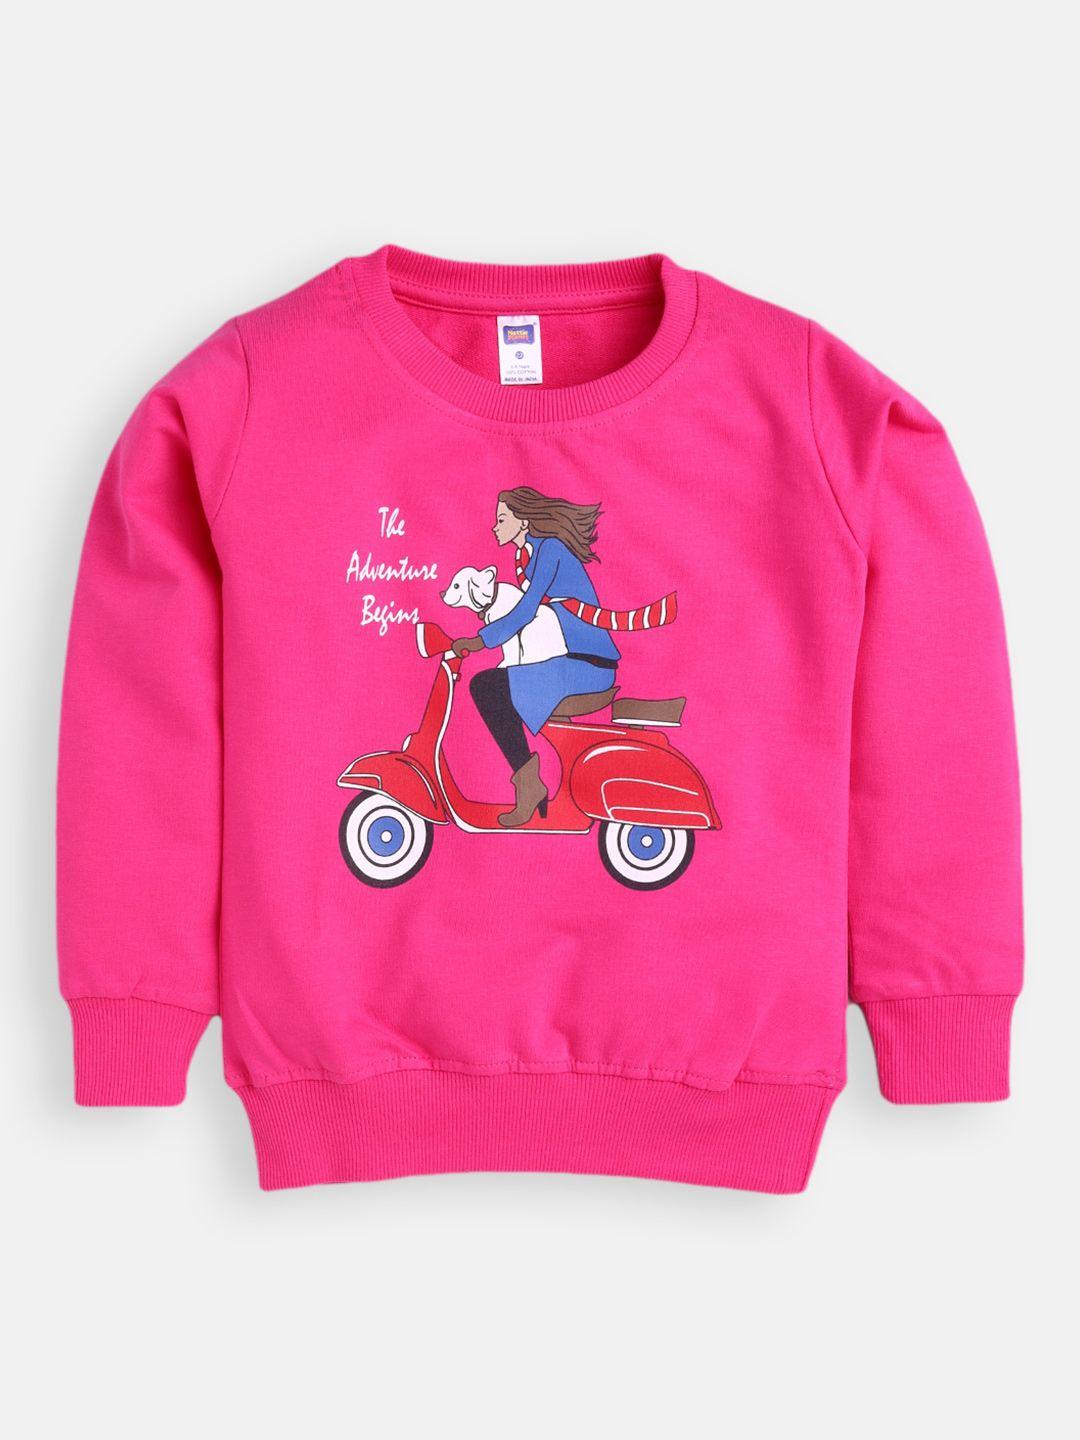 nottie-planet-boys-fuchsia-pink-printed-sweatshirt